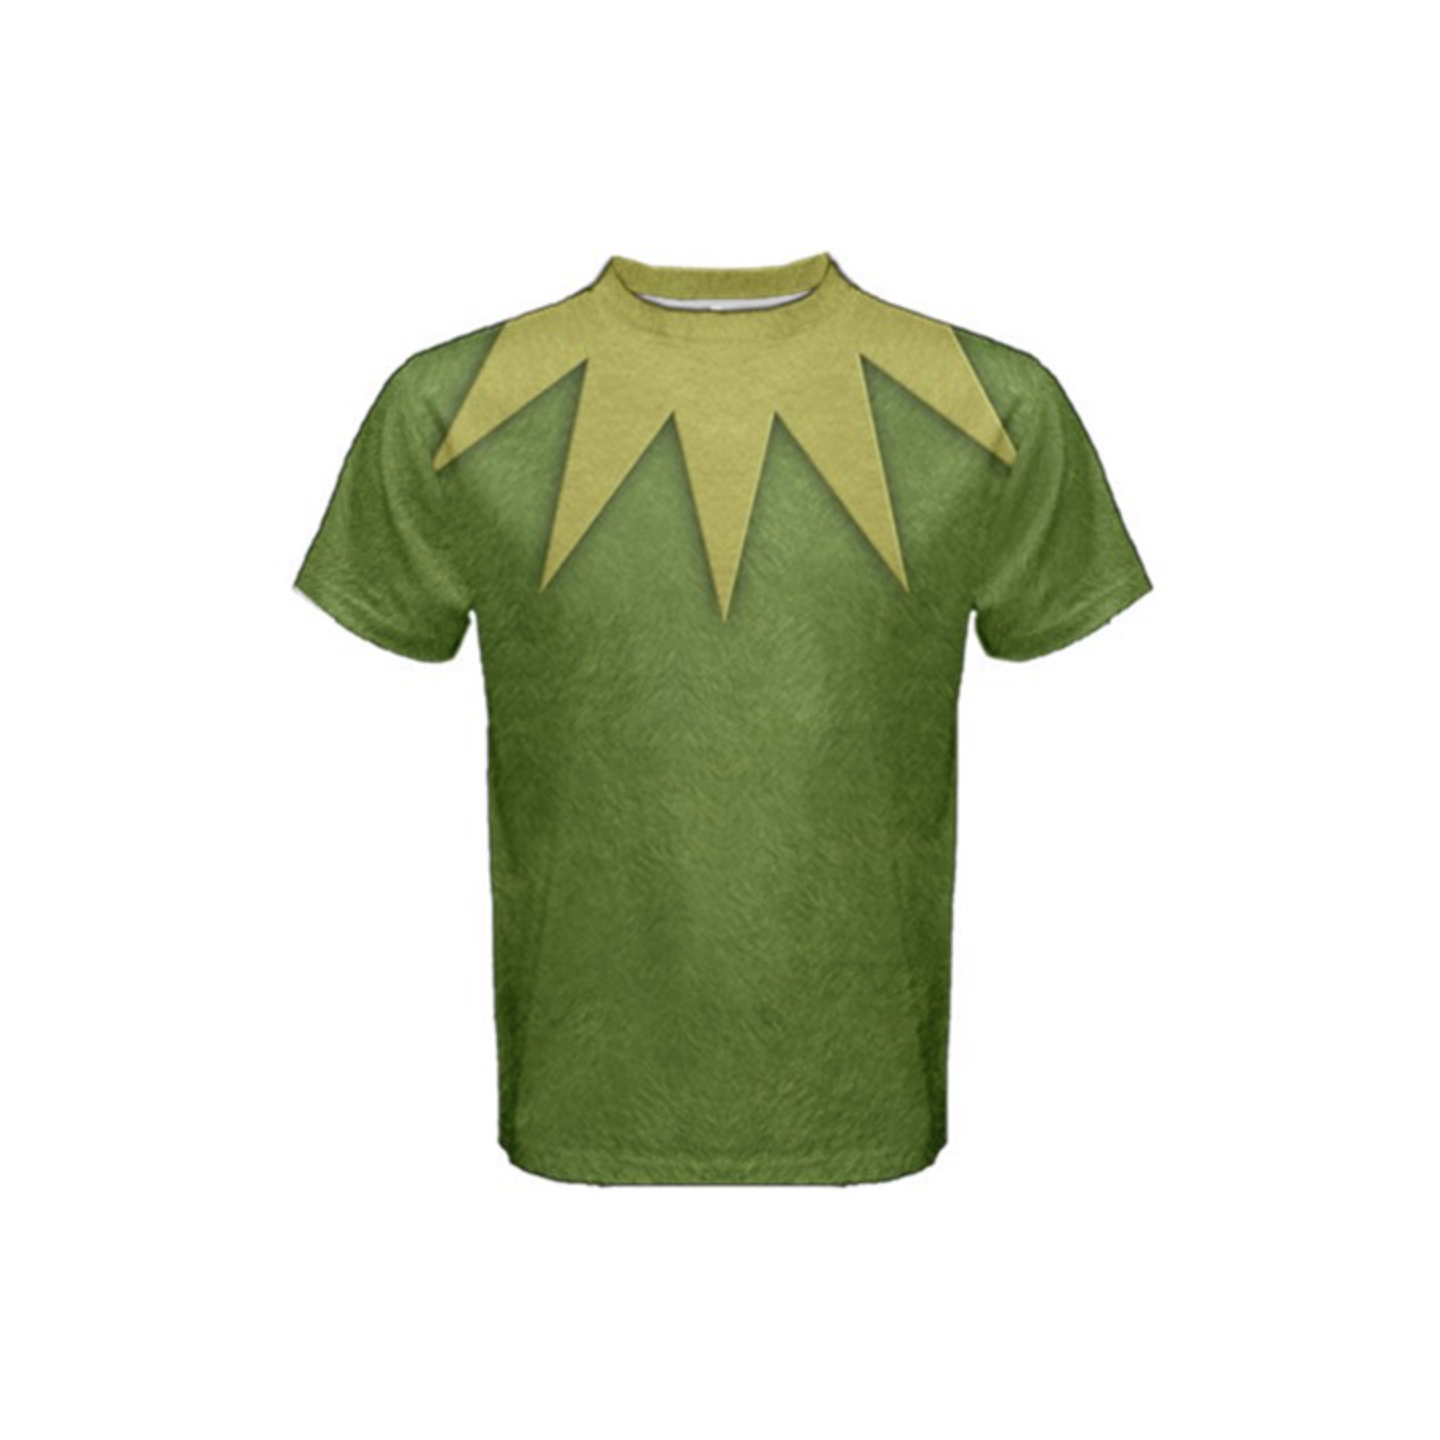 Men's Kermit Inspired Shirt